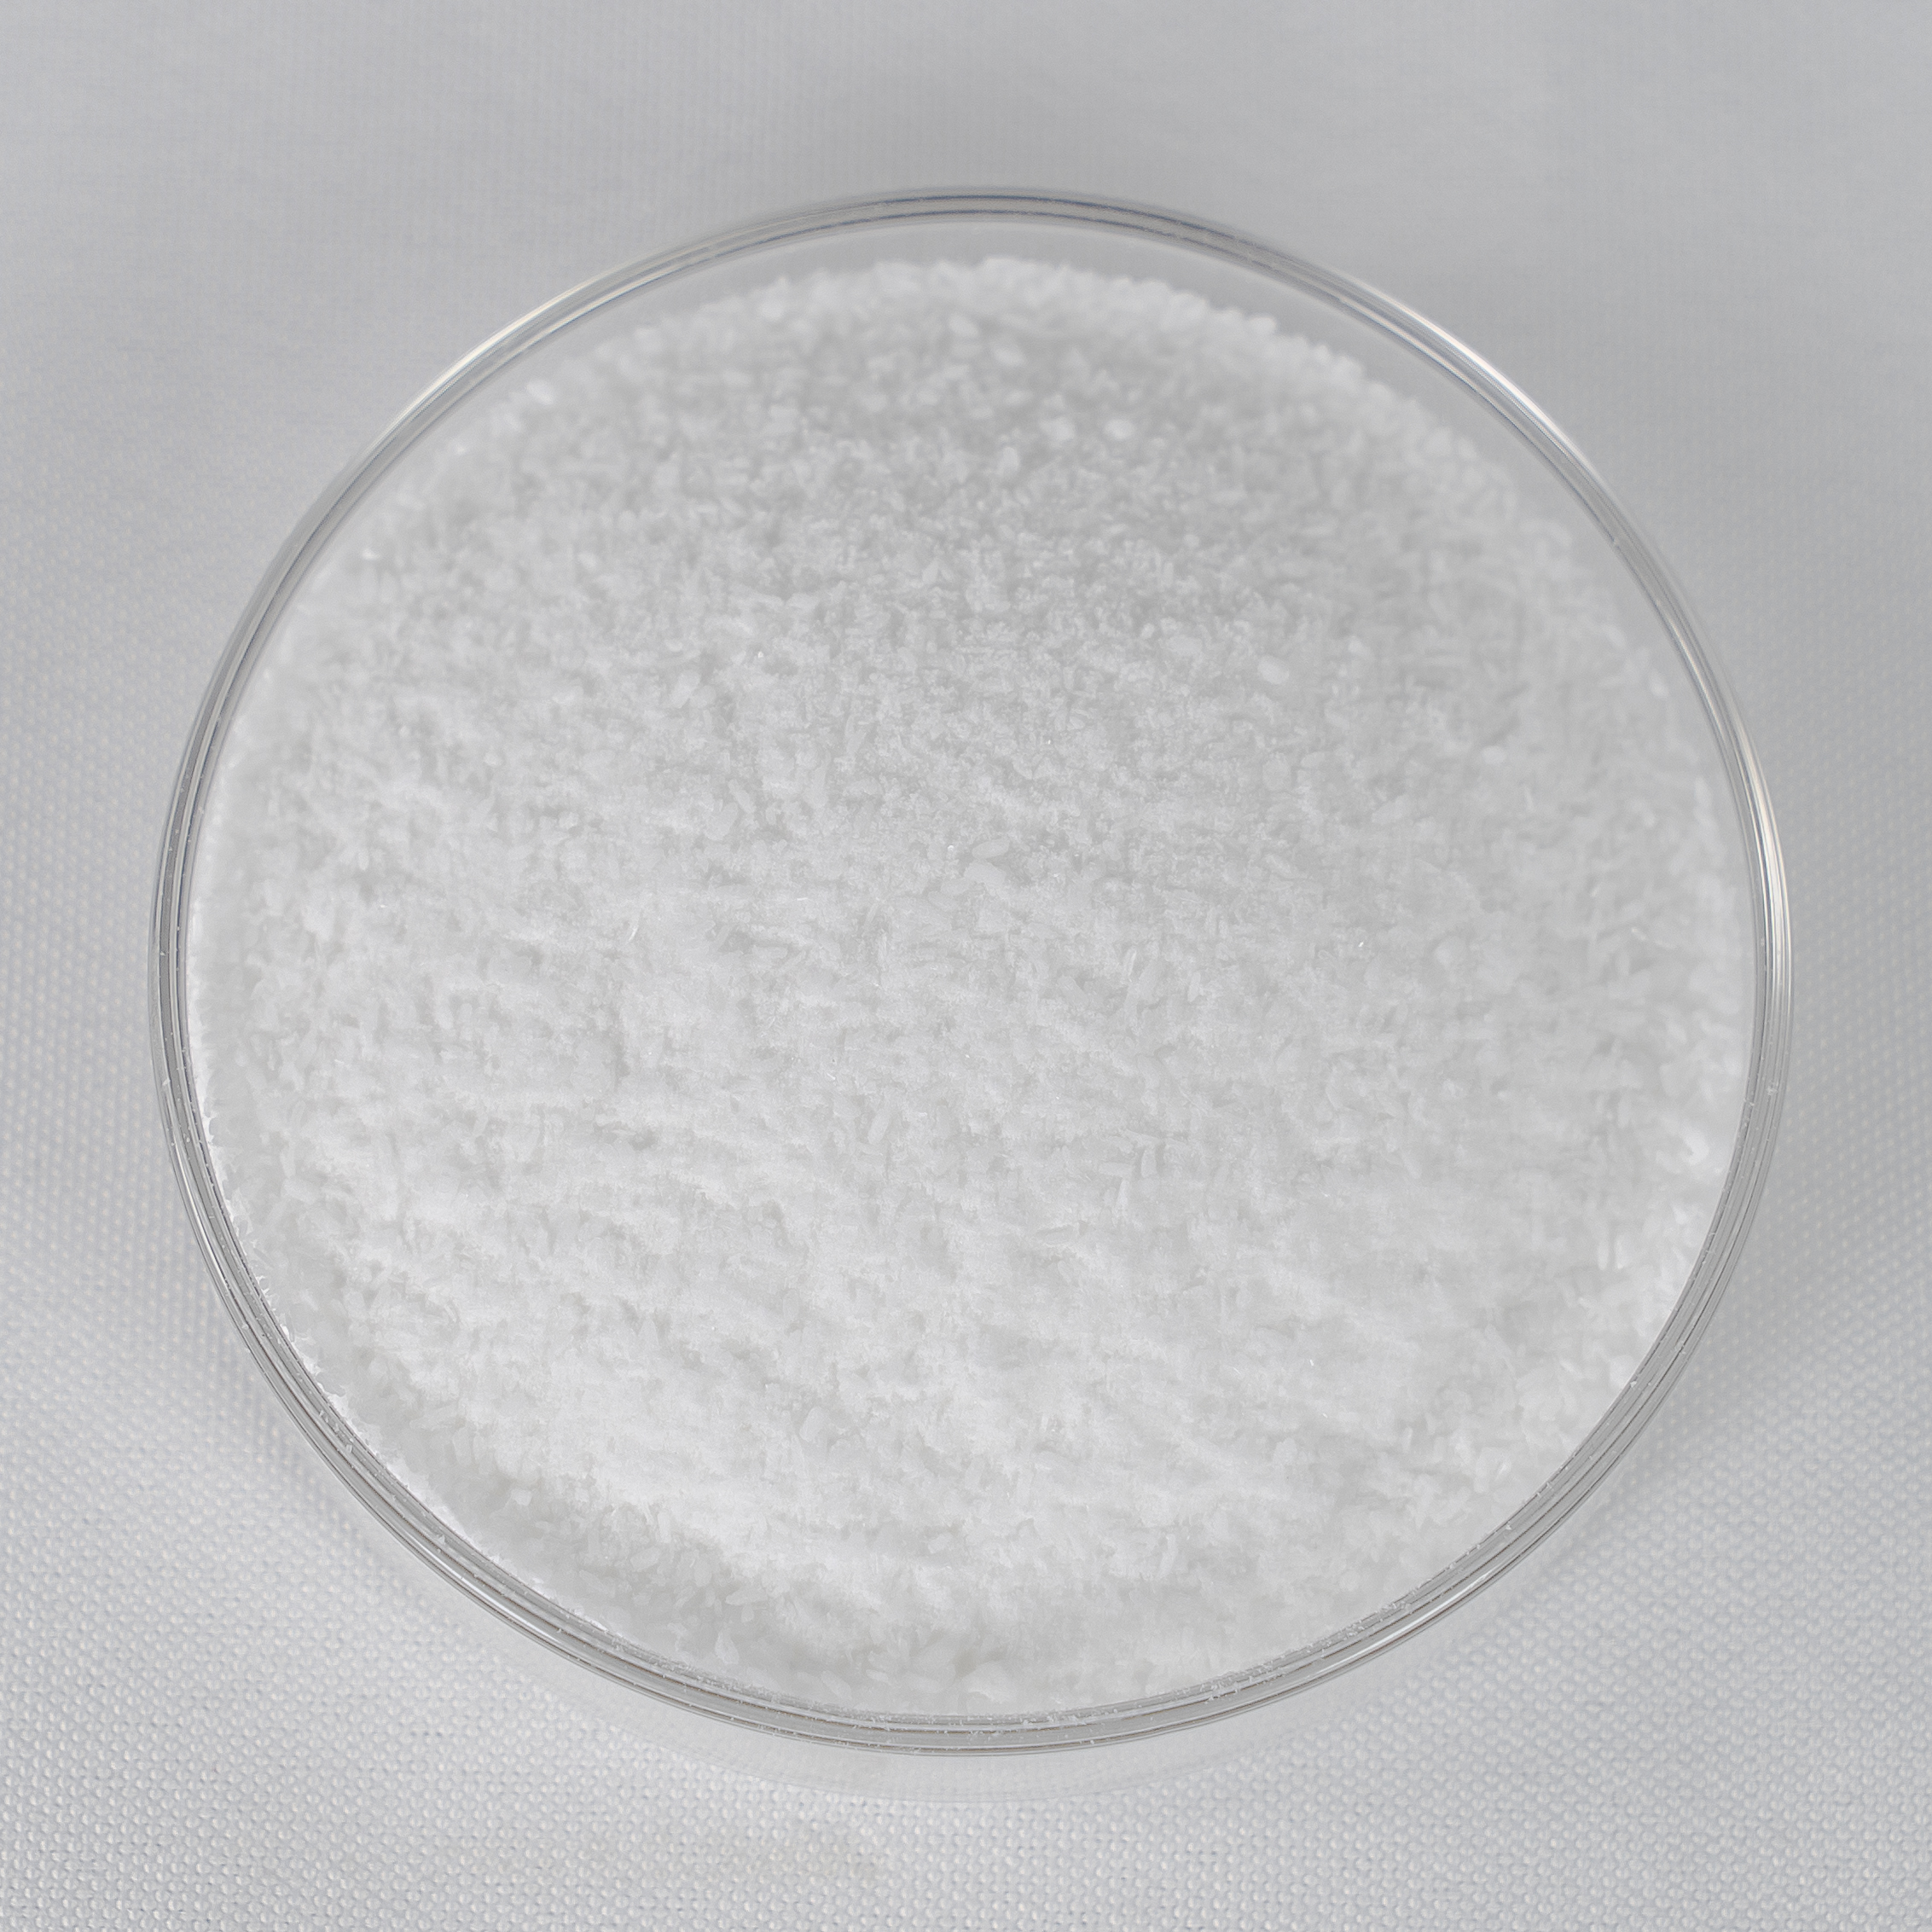 Noopept (GVS-111) Powder CAS 157115-85-0 